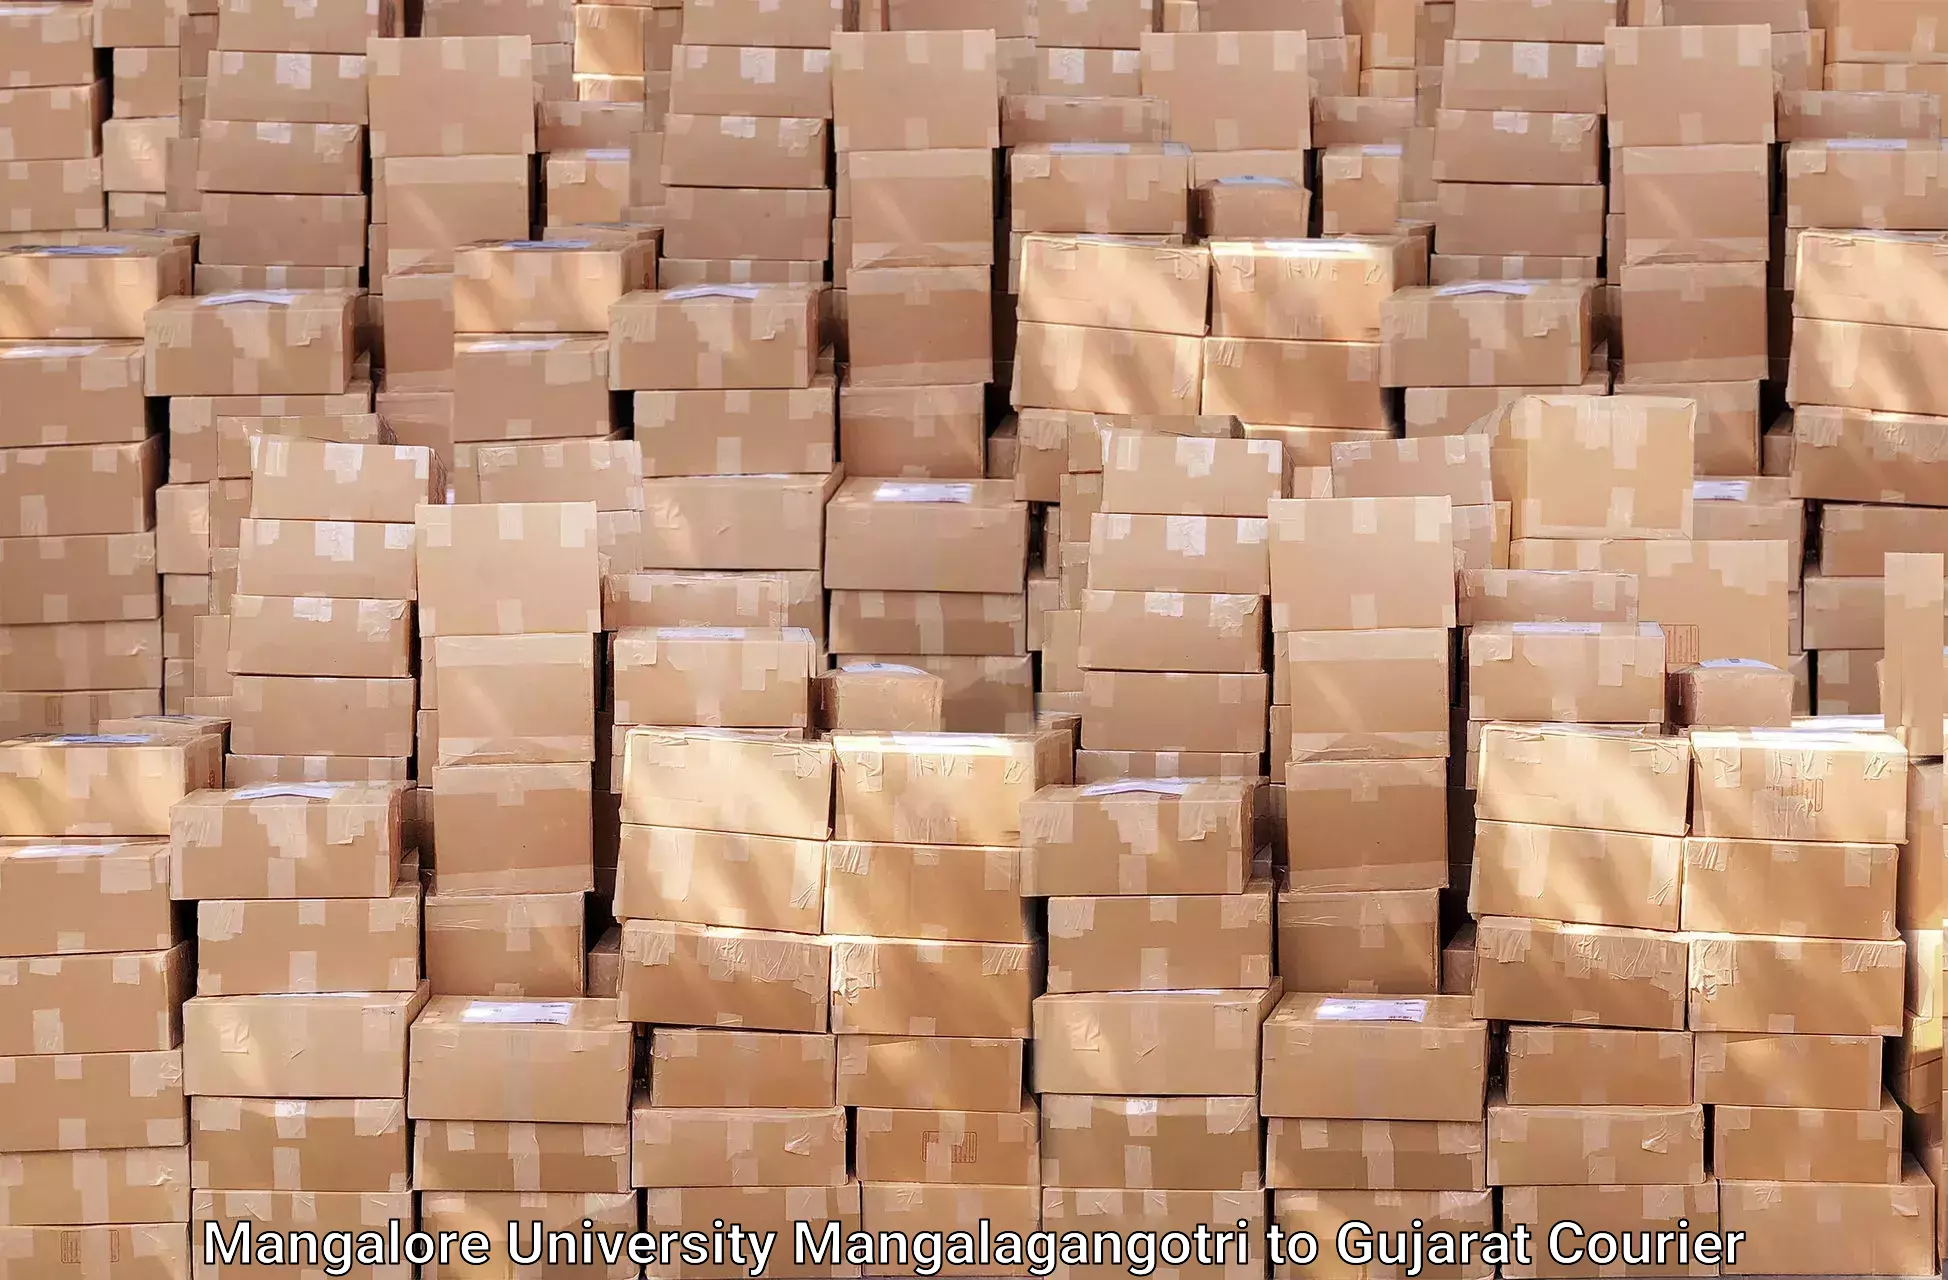 Furniture moving assistance Mangalore University Mangalagangotri to Gujarat